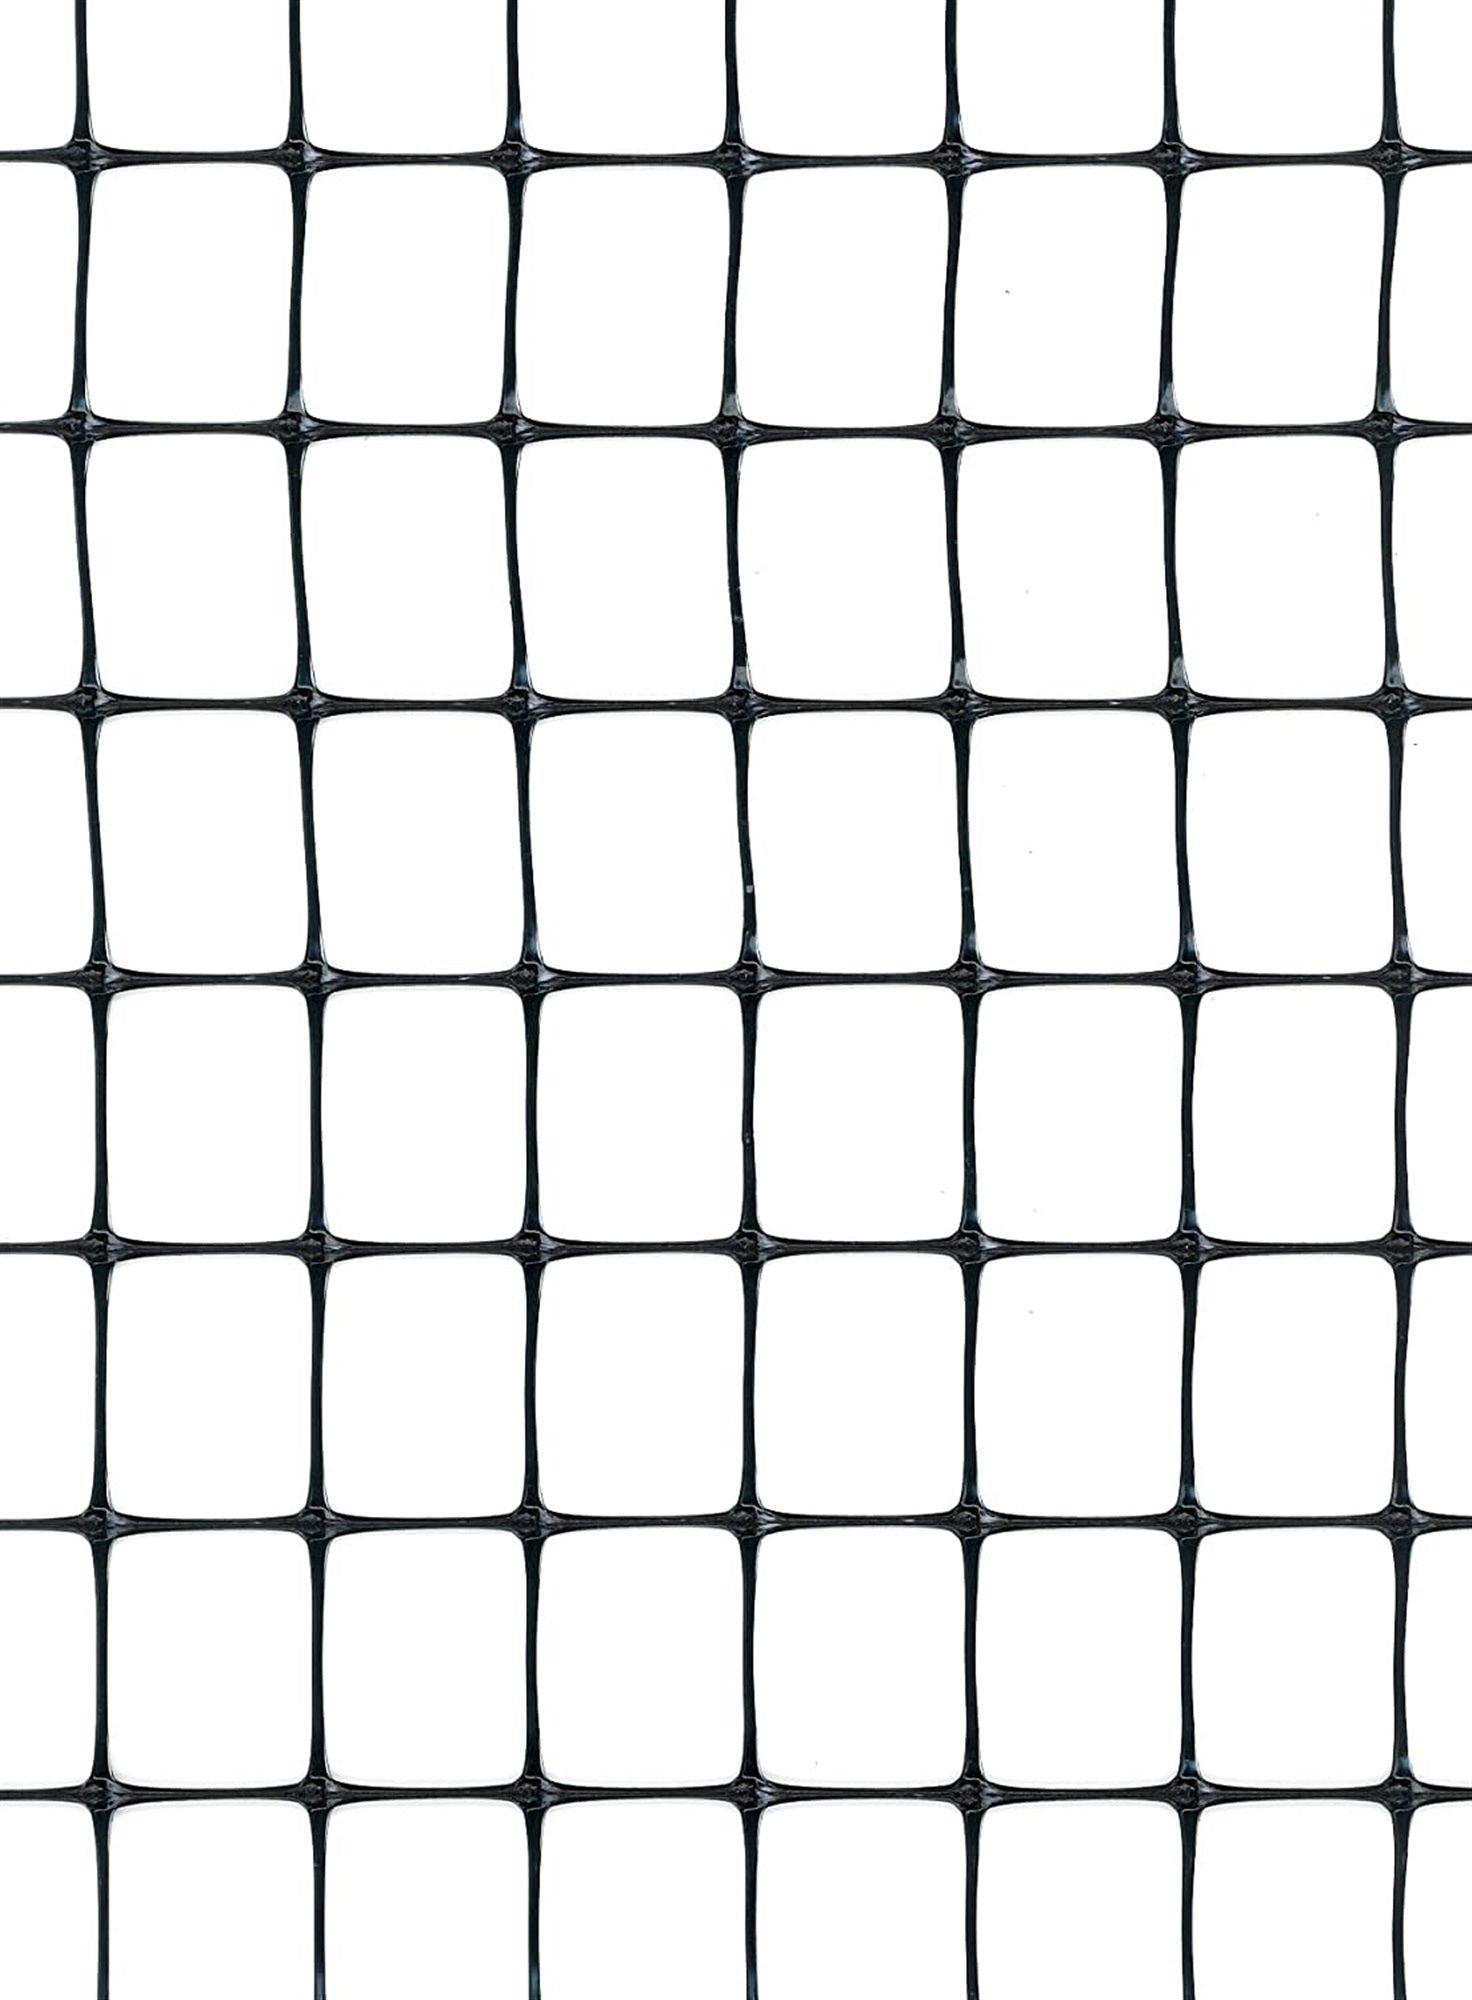 Tenax Deer Net, Black, 7 x 100 feet, Black